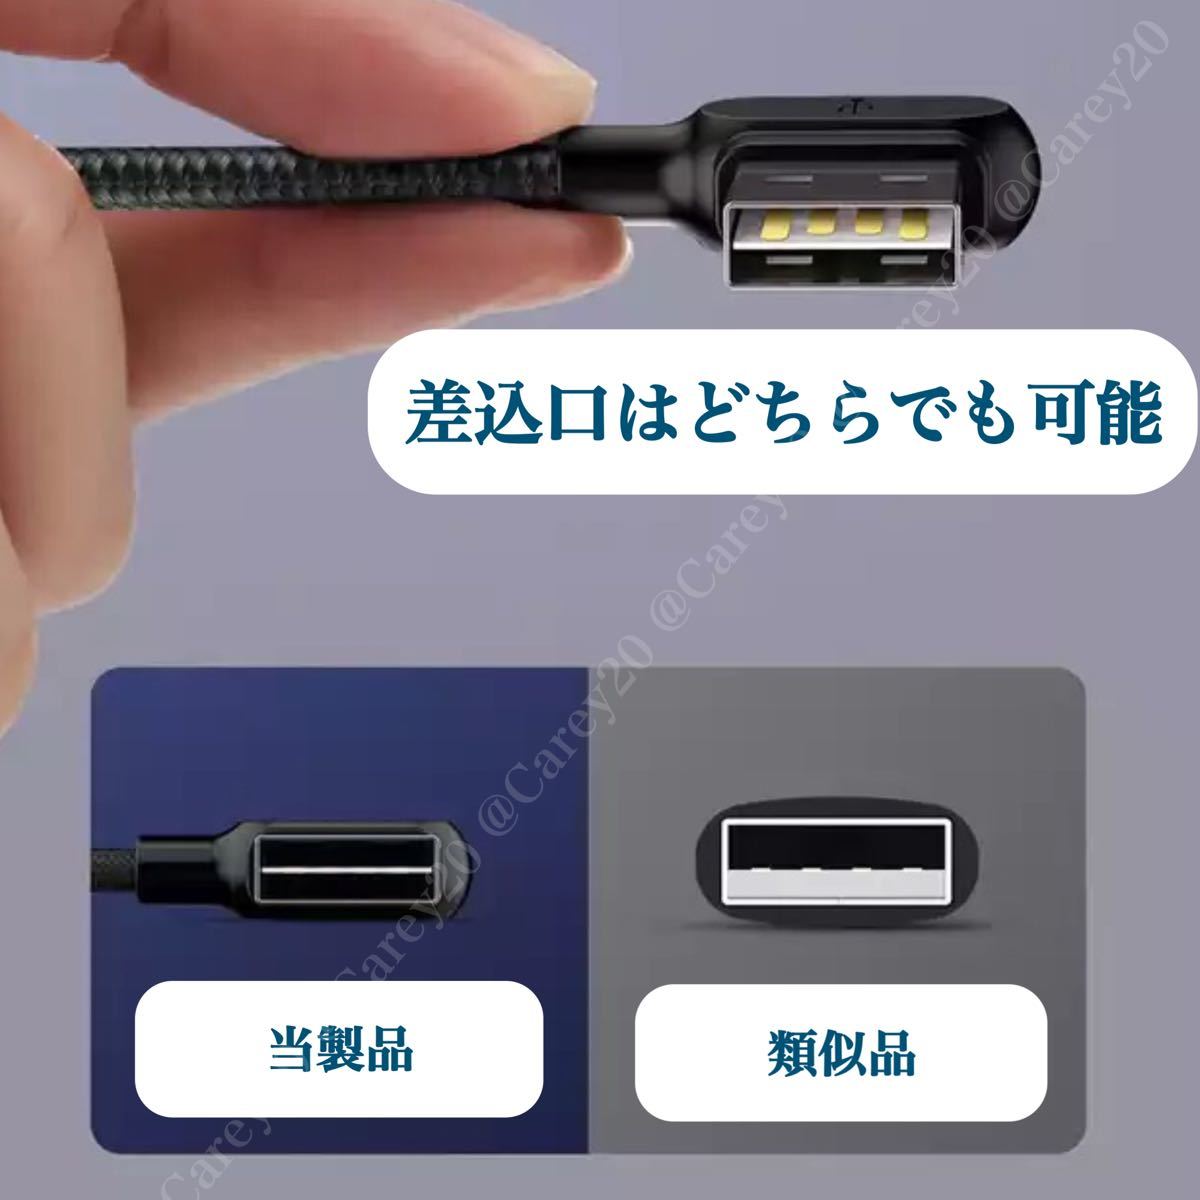 【L字型 3m】mcdodo社製 充電 ケーブル ライトニングケーブル iPhone急速充電 USB ケーブル データ転送 充電器